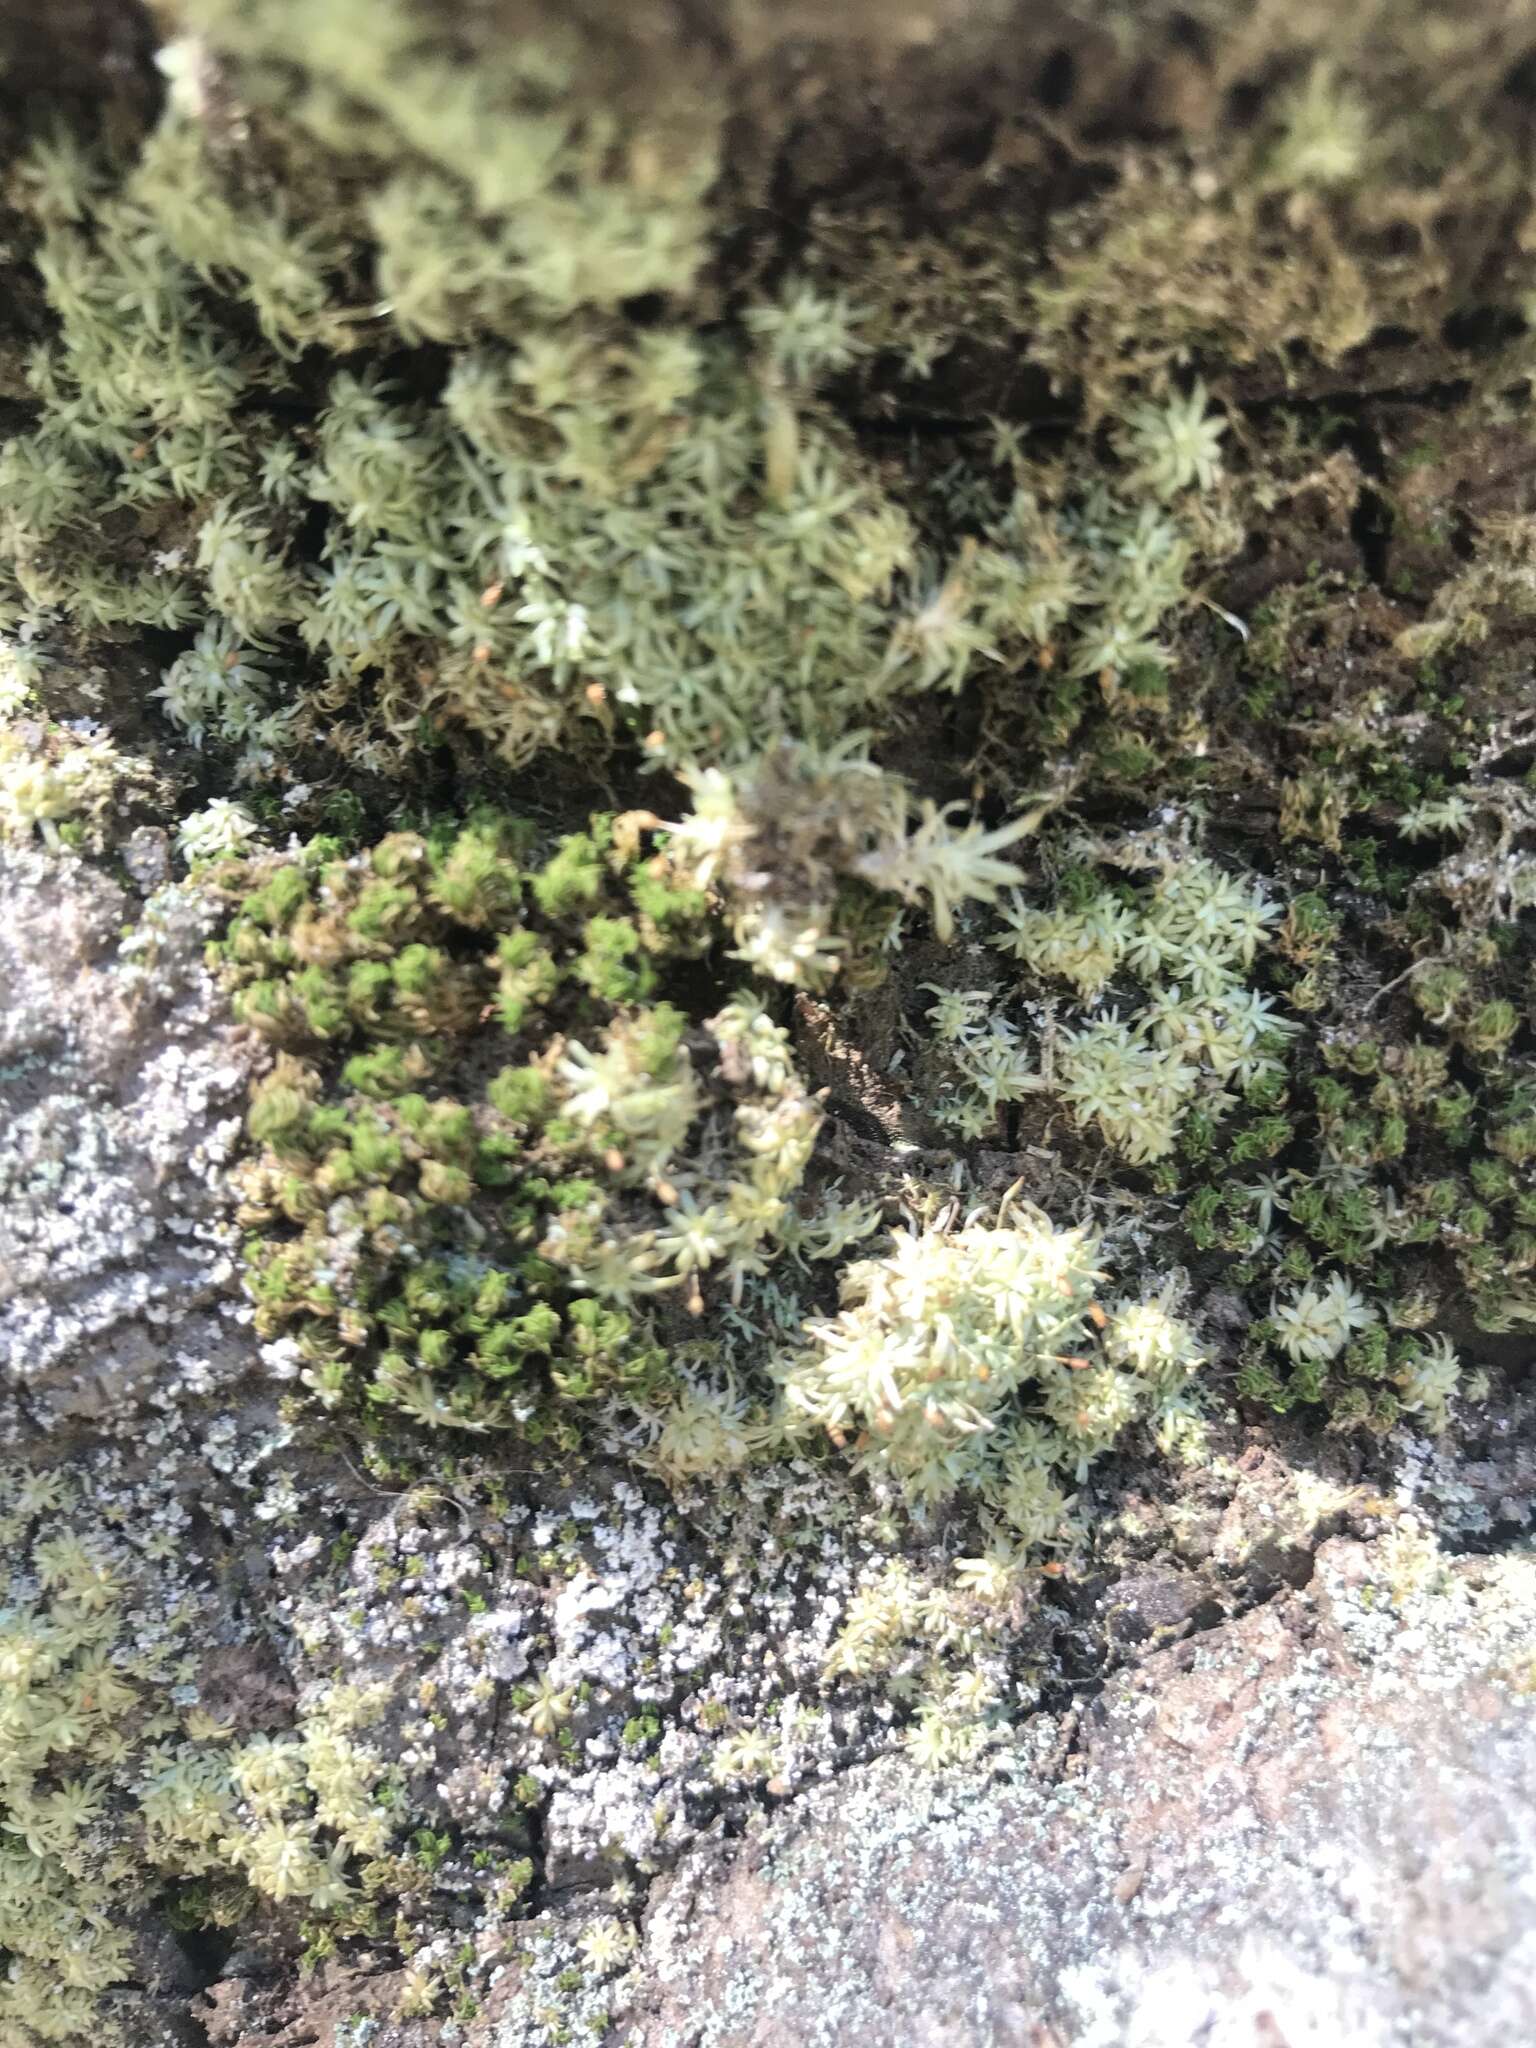 Image of octoblepharum moss